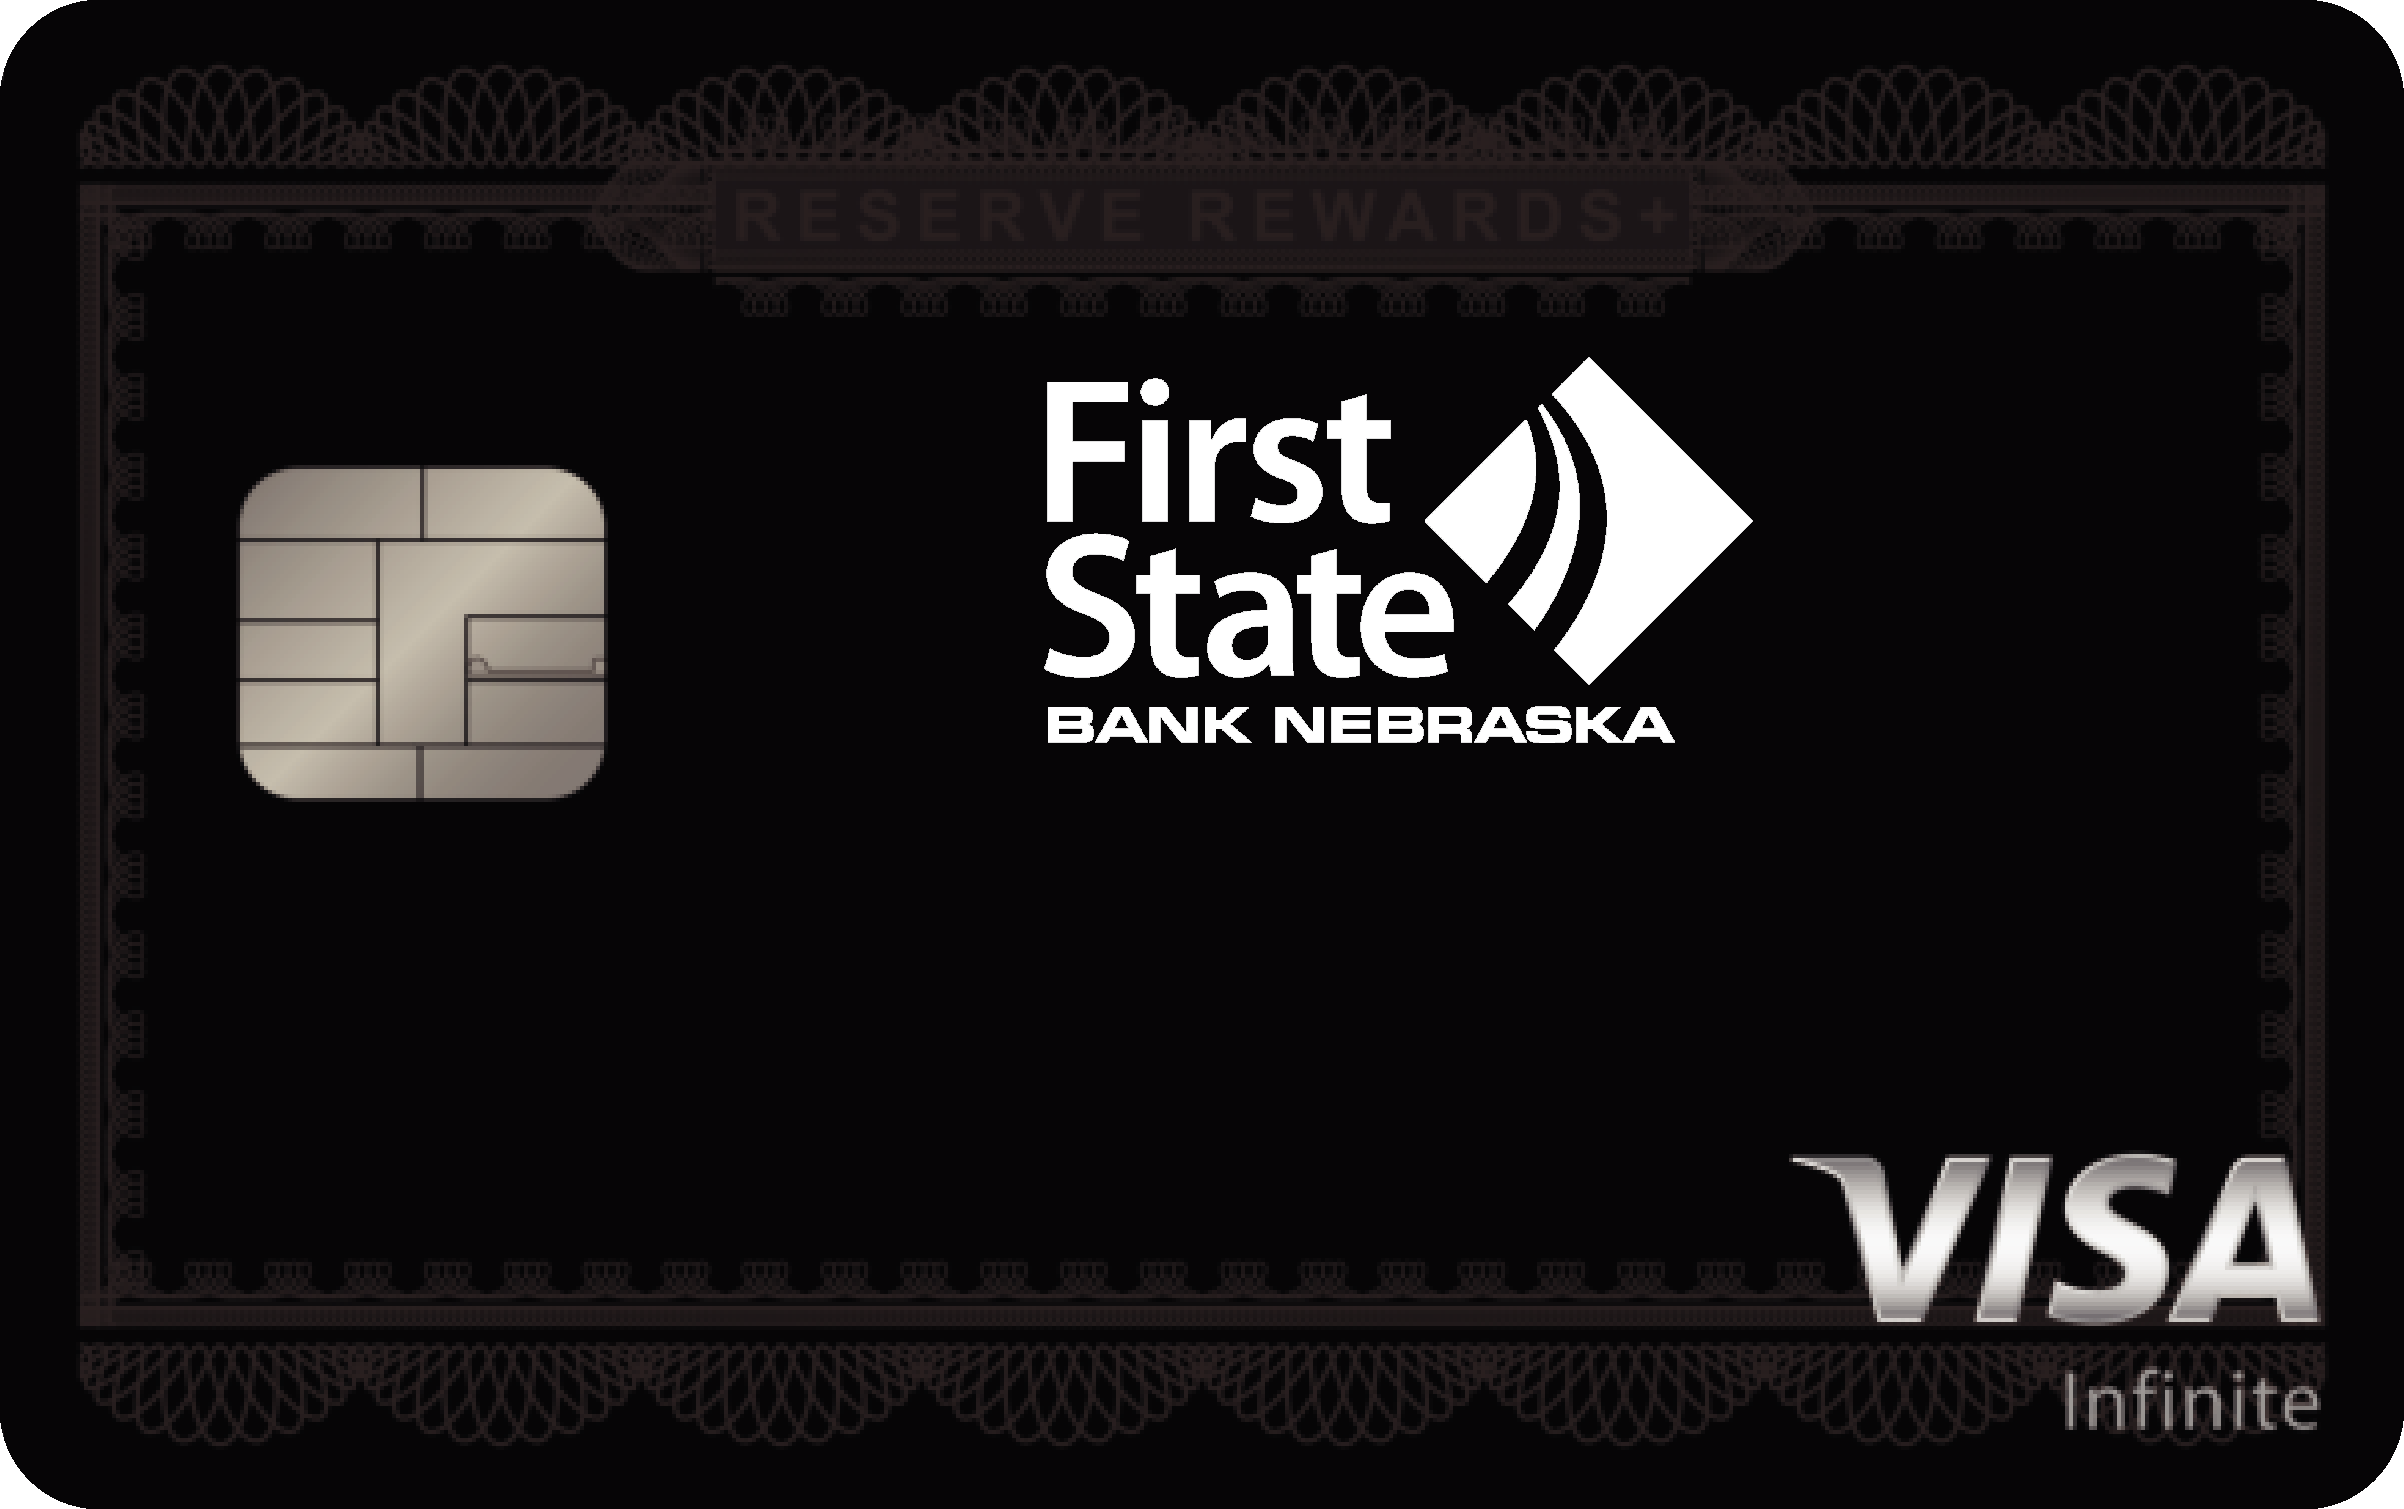 First State Bank Nebraska